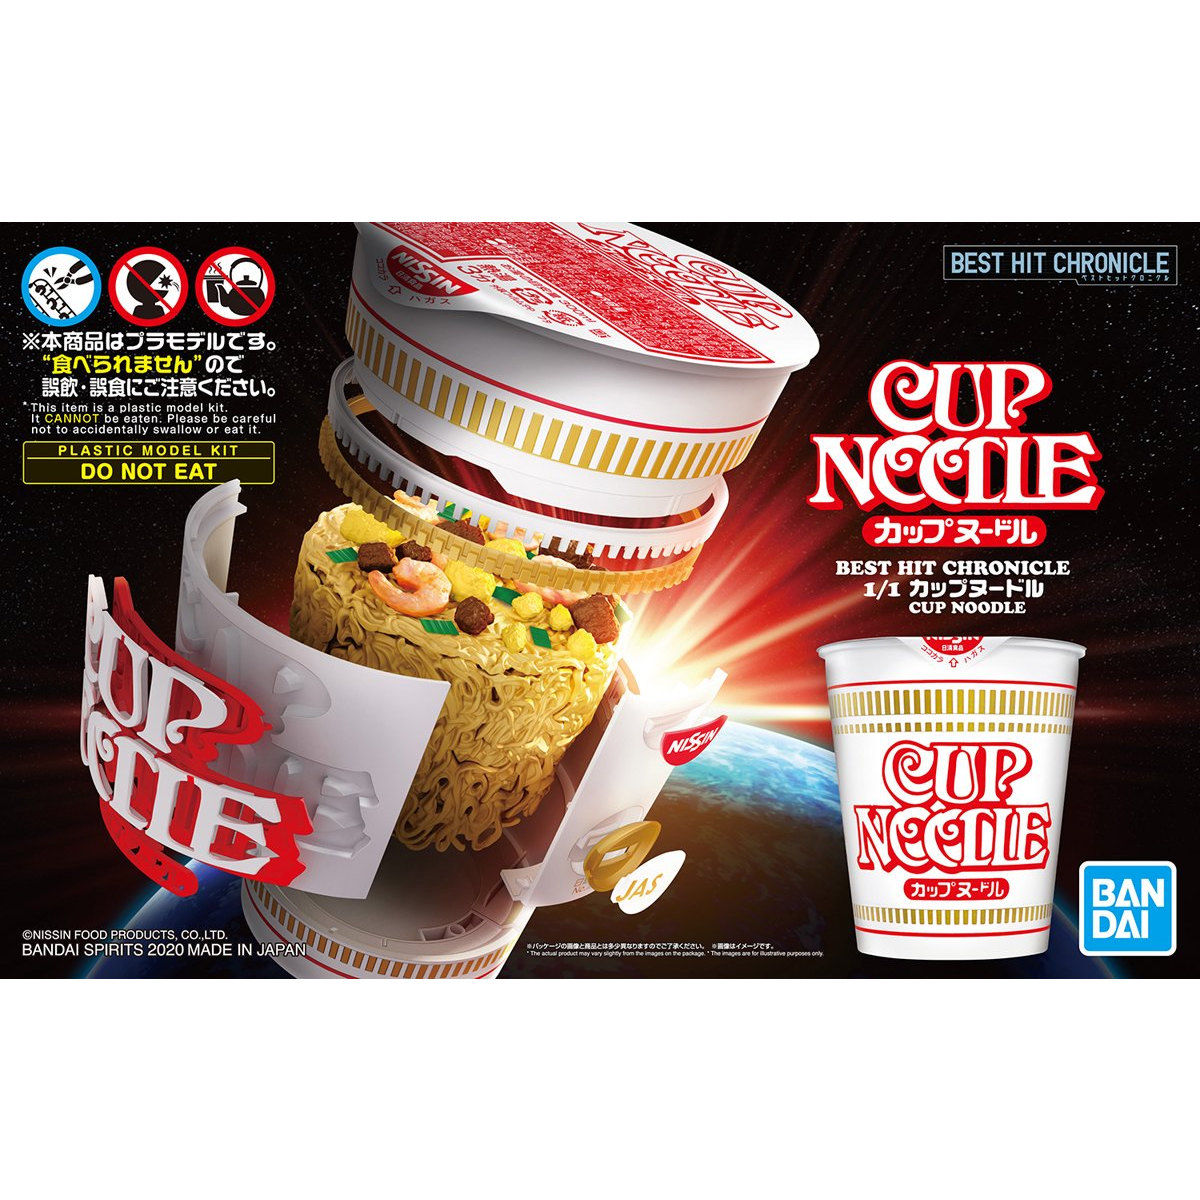 Best Hit Chronicle Cup Noodle 1/1